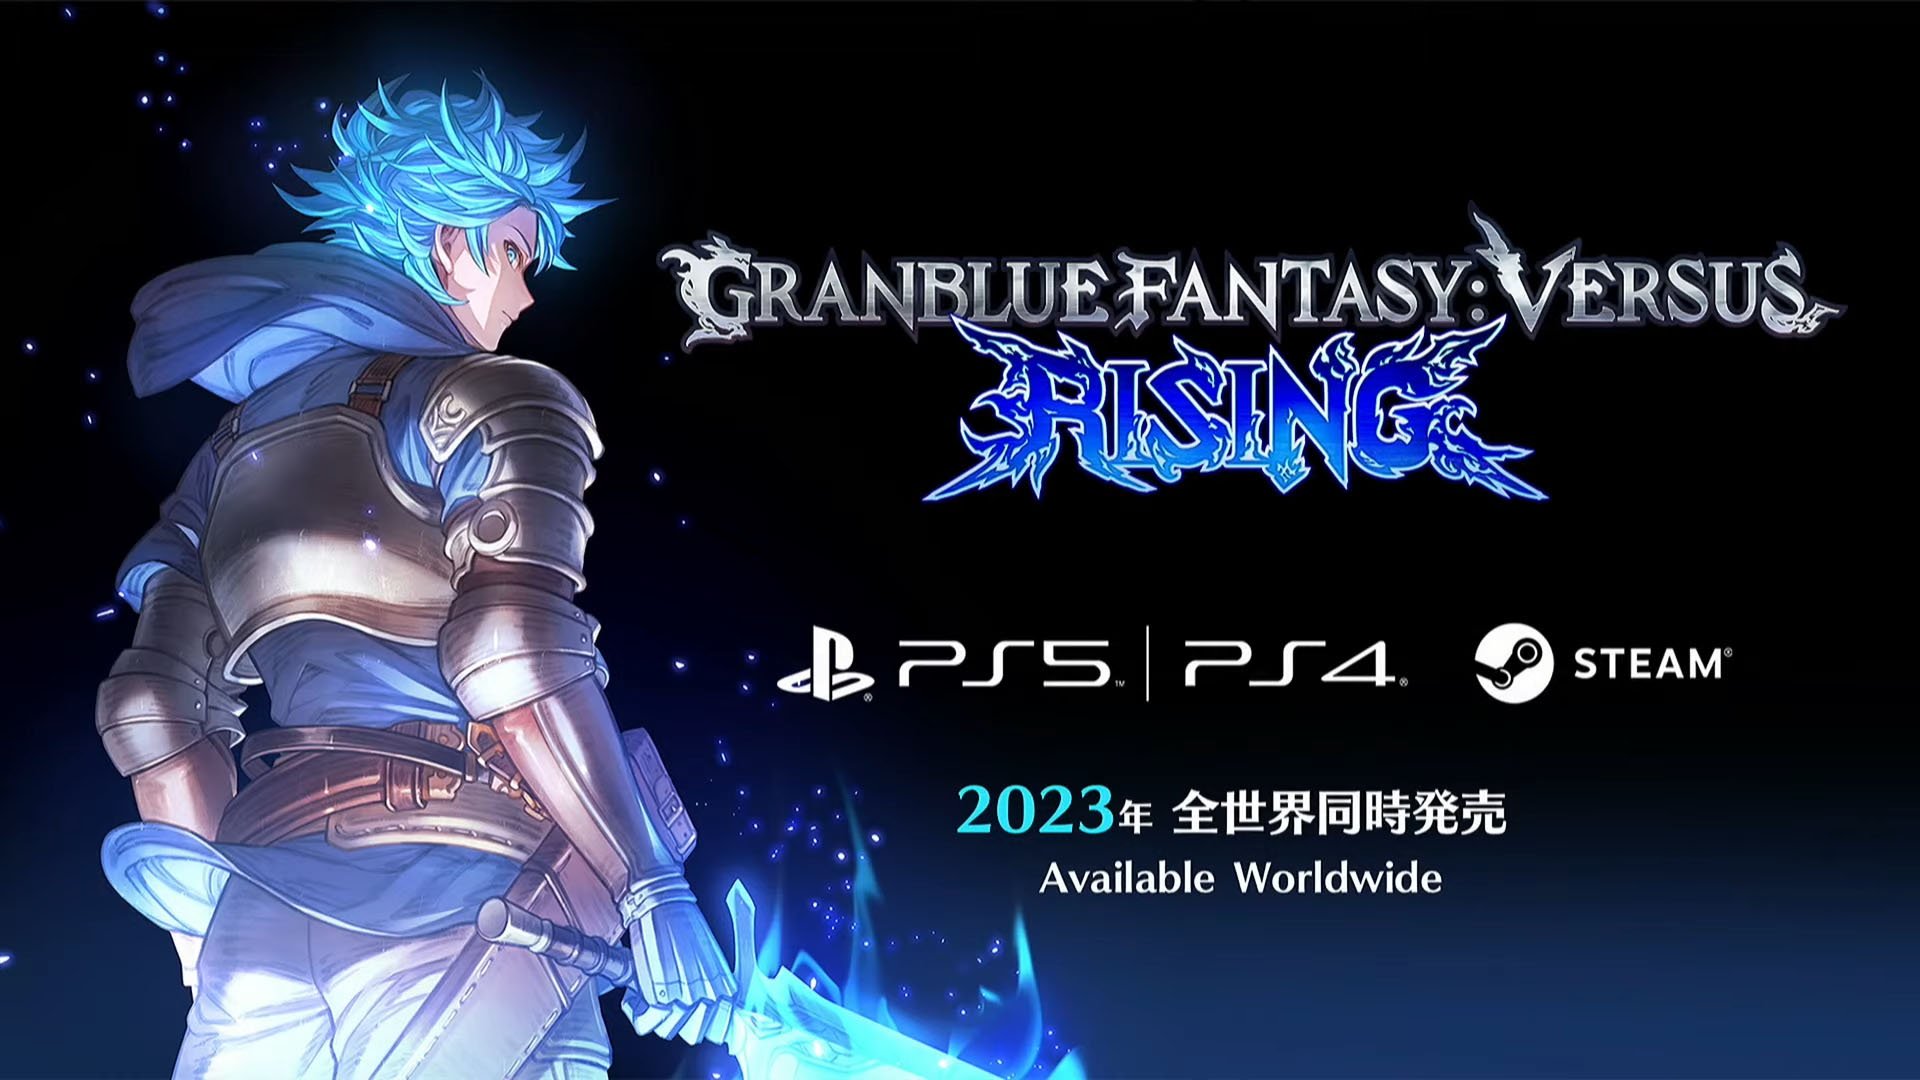 Granblue Fantasy Versus Rising Reveal Trailer 4K 